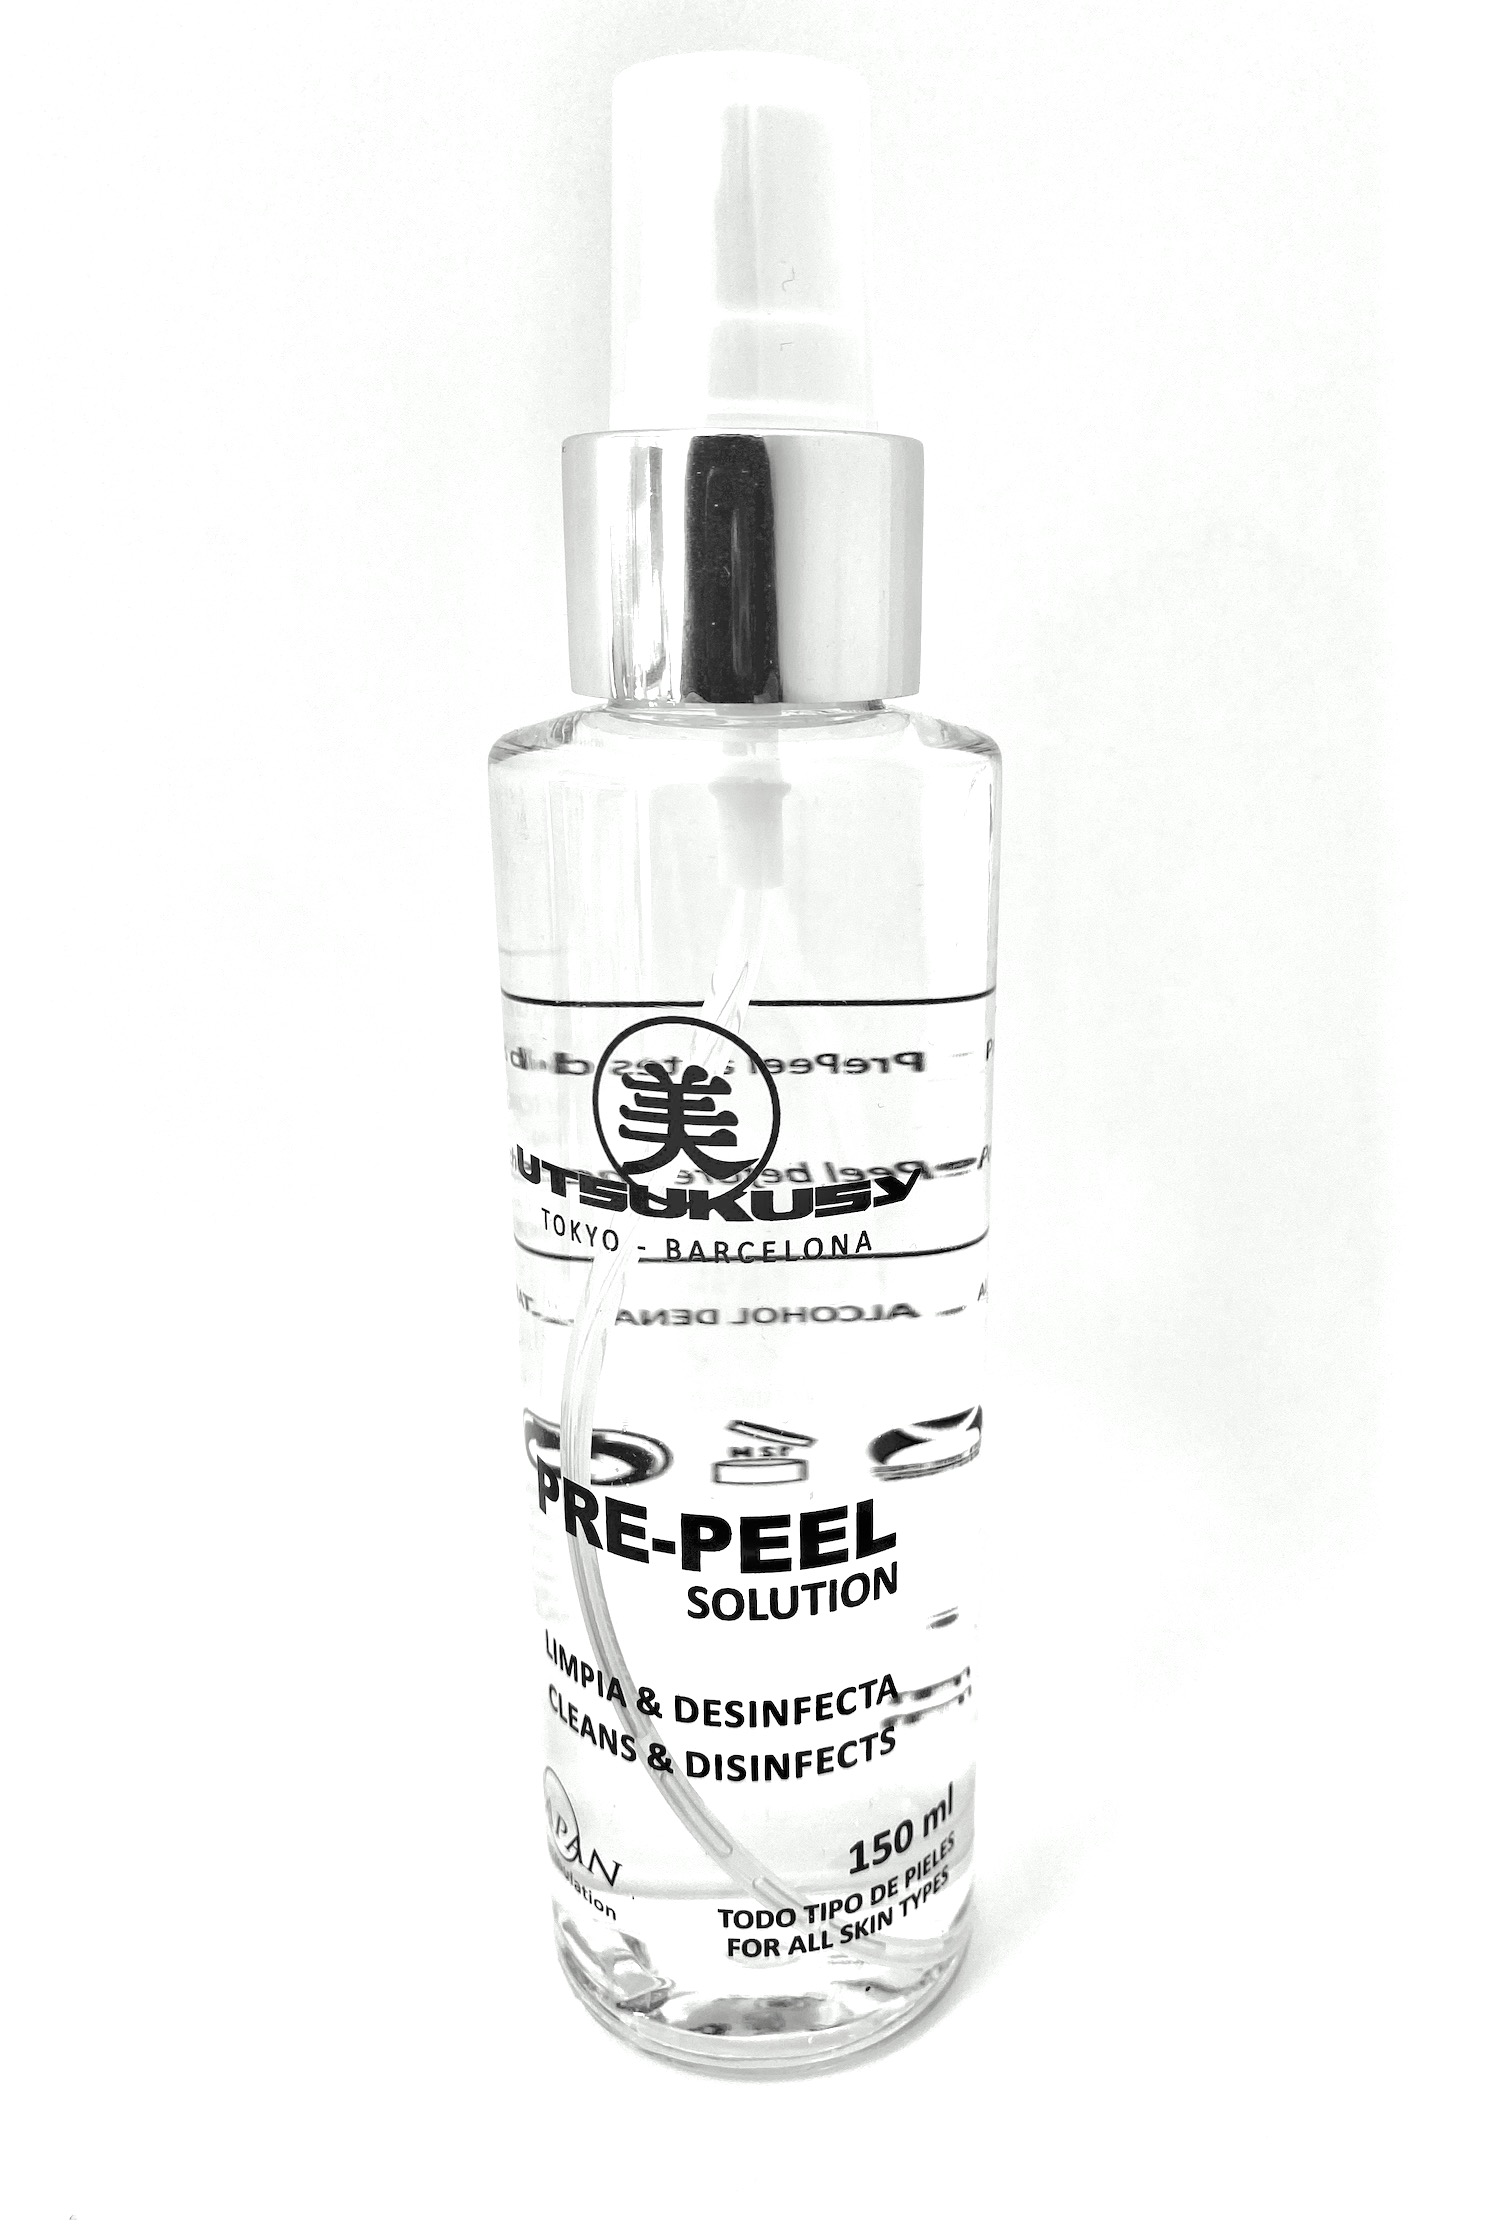 Pre-Peel Solution - Utsukusy Cosmetics